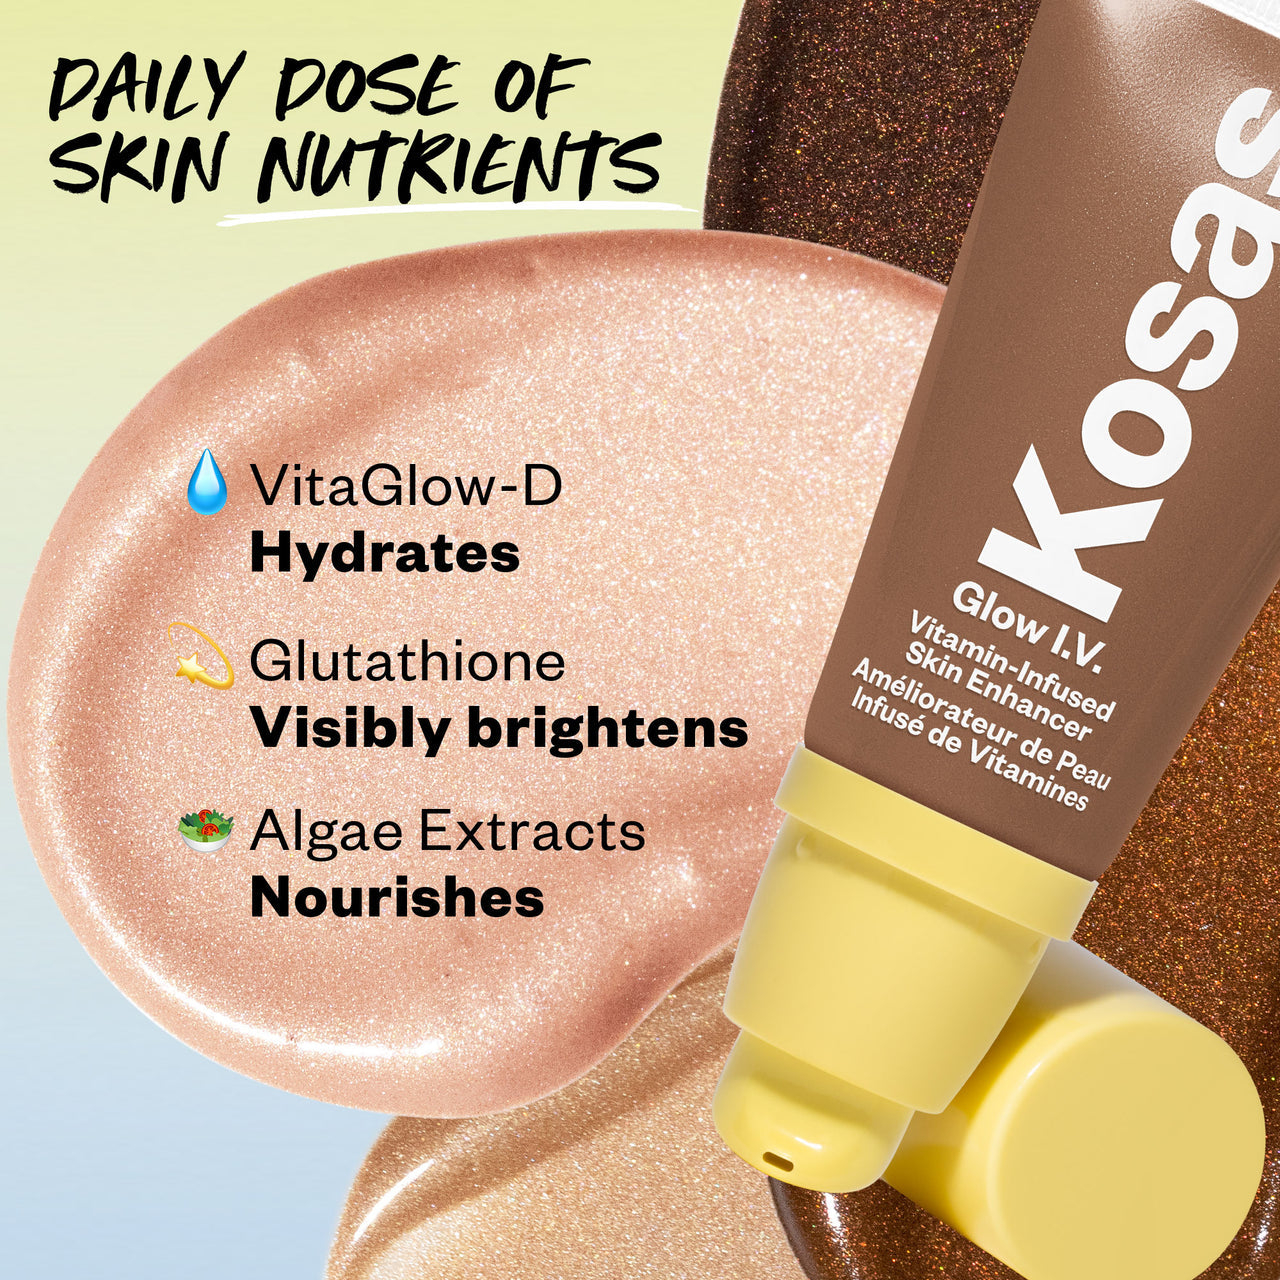 Kosas Glow I.V. Vitamin-Infused Skin Enhancer